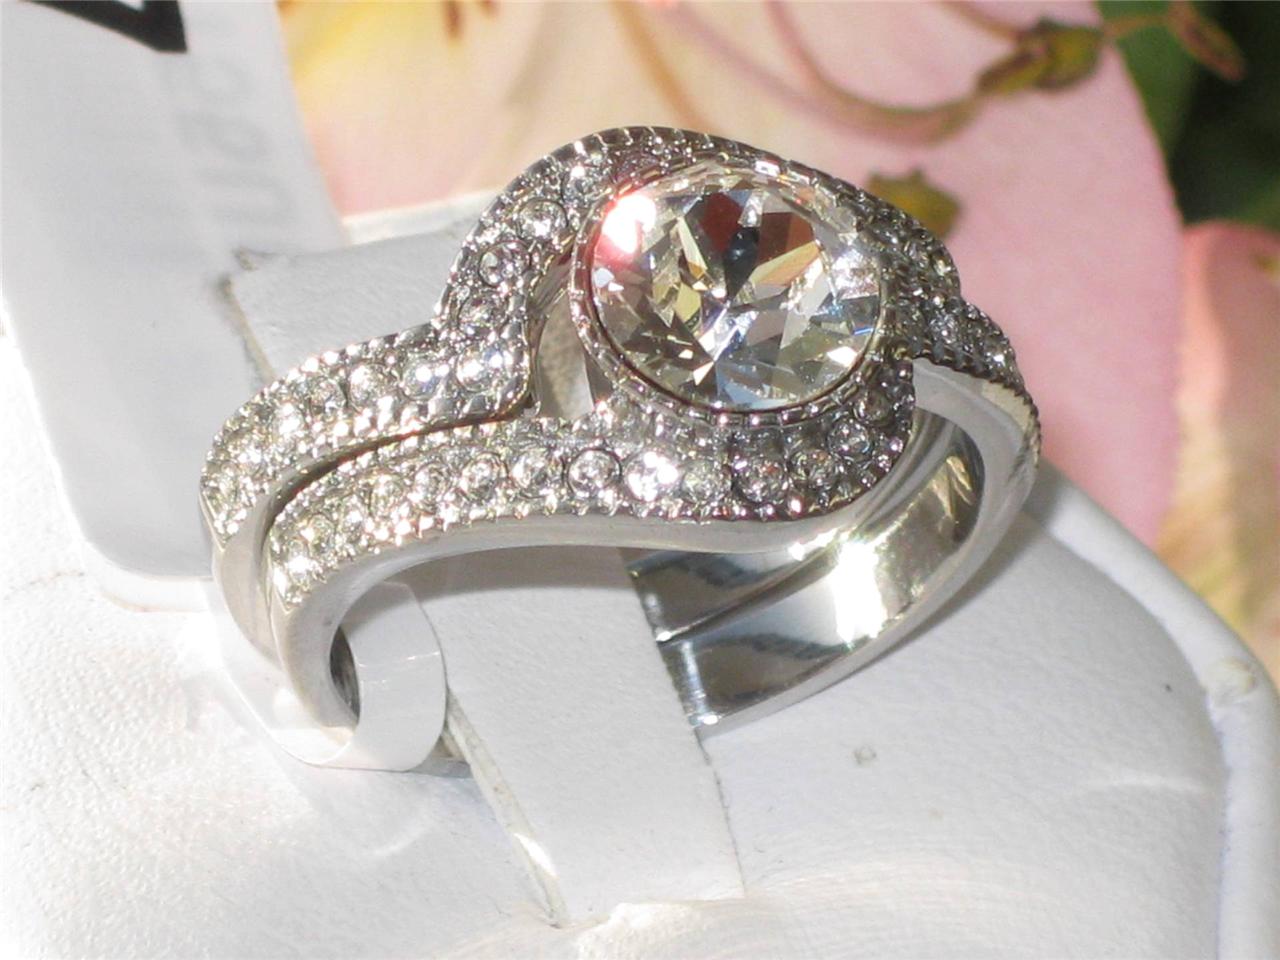 ... NO TARNISH WEDDING BAND ENGAGEMENT RING SET SIMULATED DIAMOND RING SZ